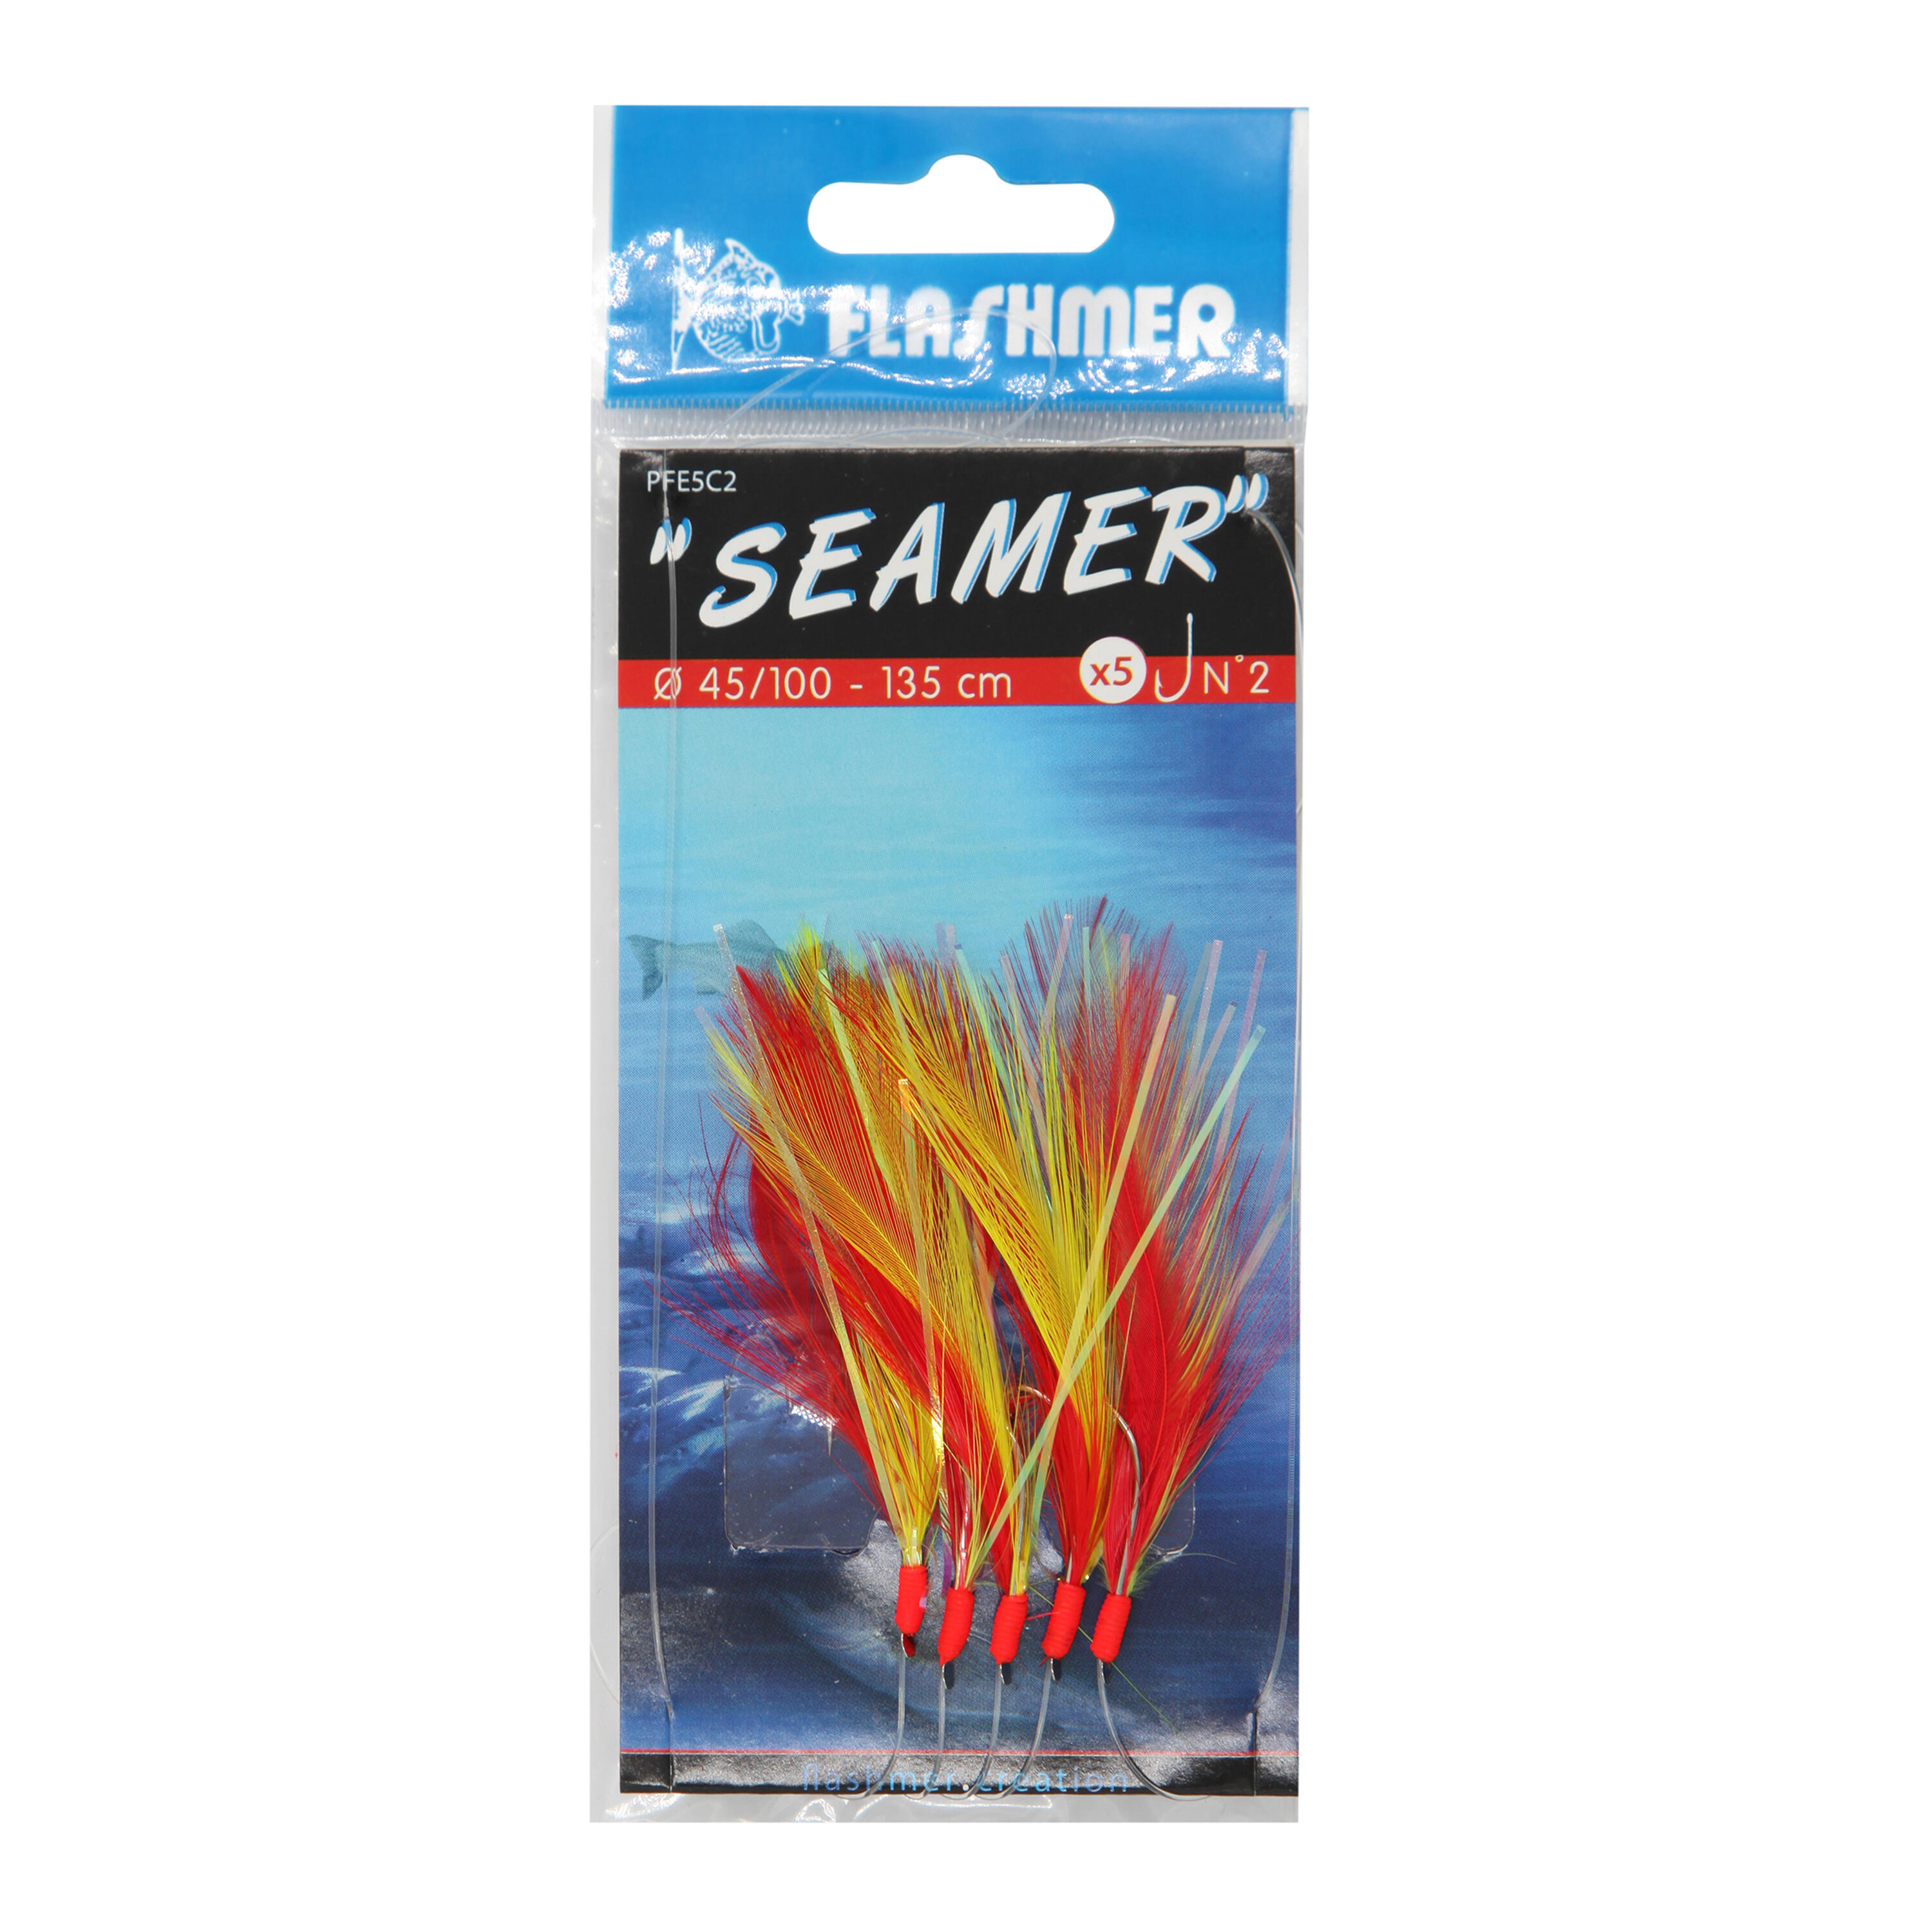 FLASHMER Seamer 5 x N°2 hooks sea fishing spinners/feathers